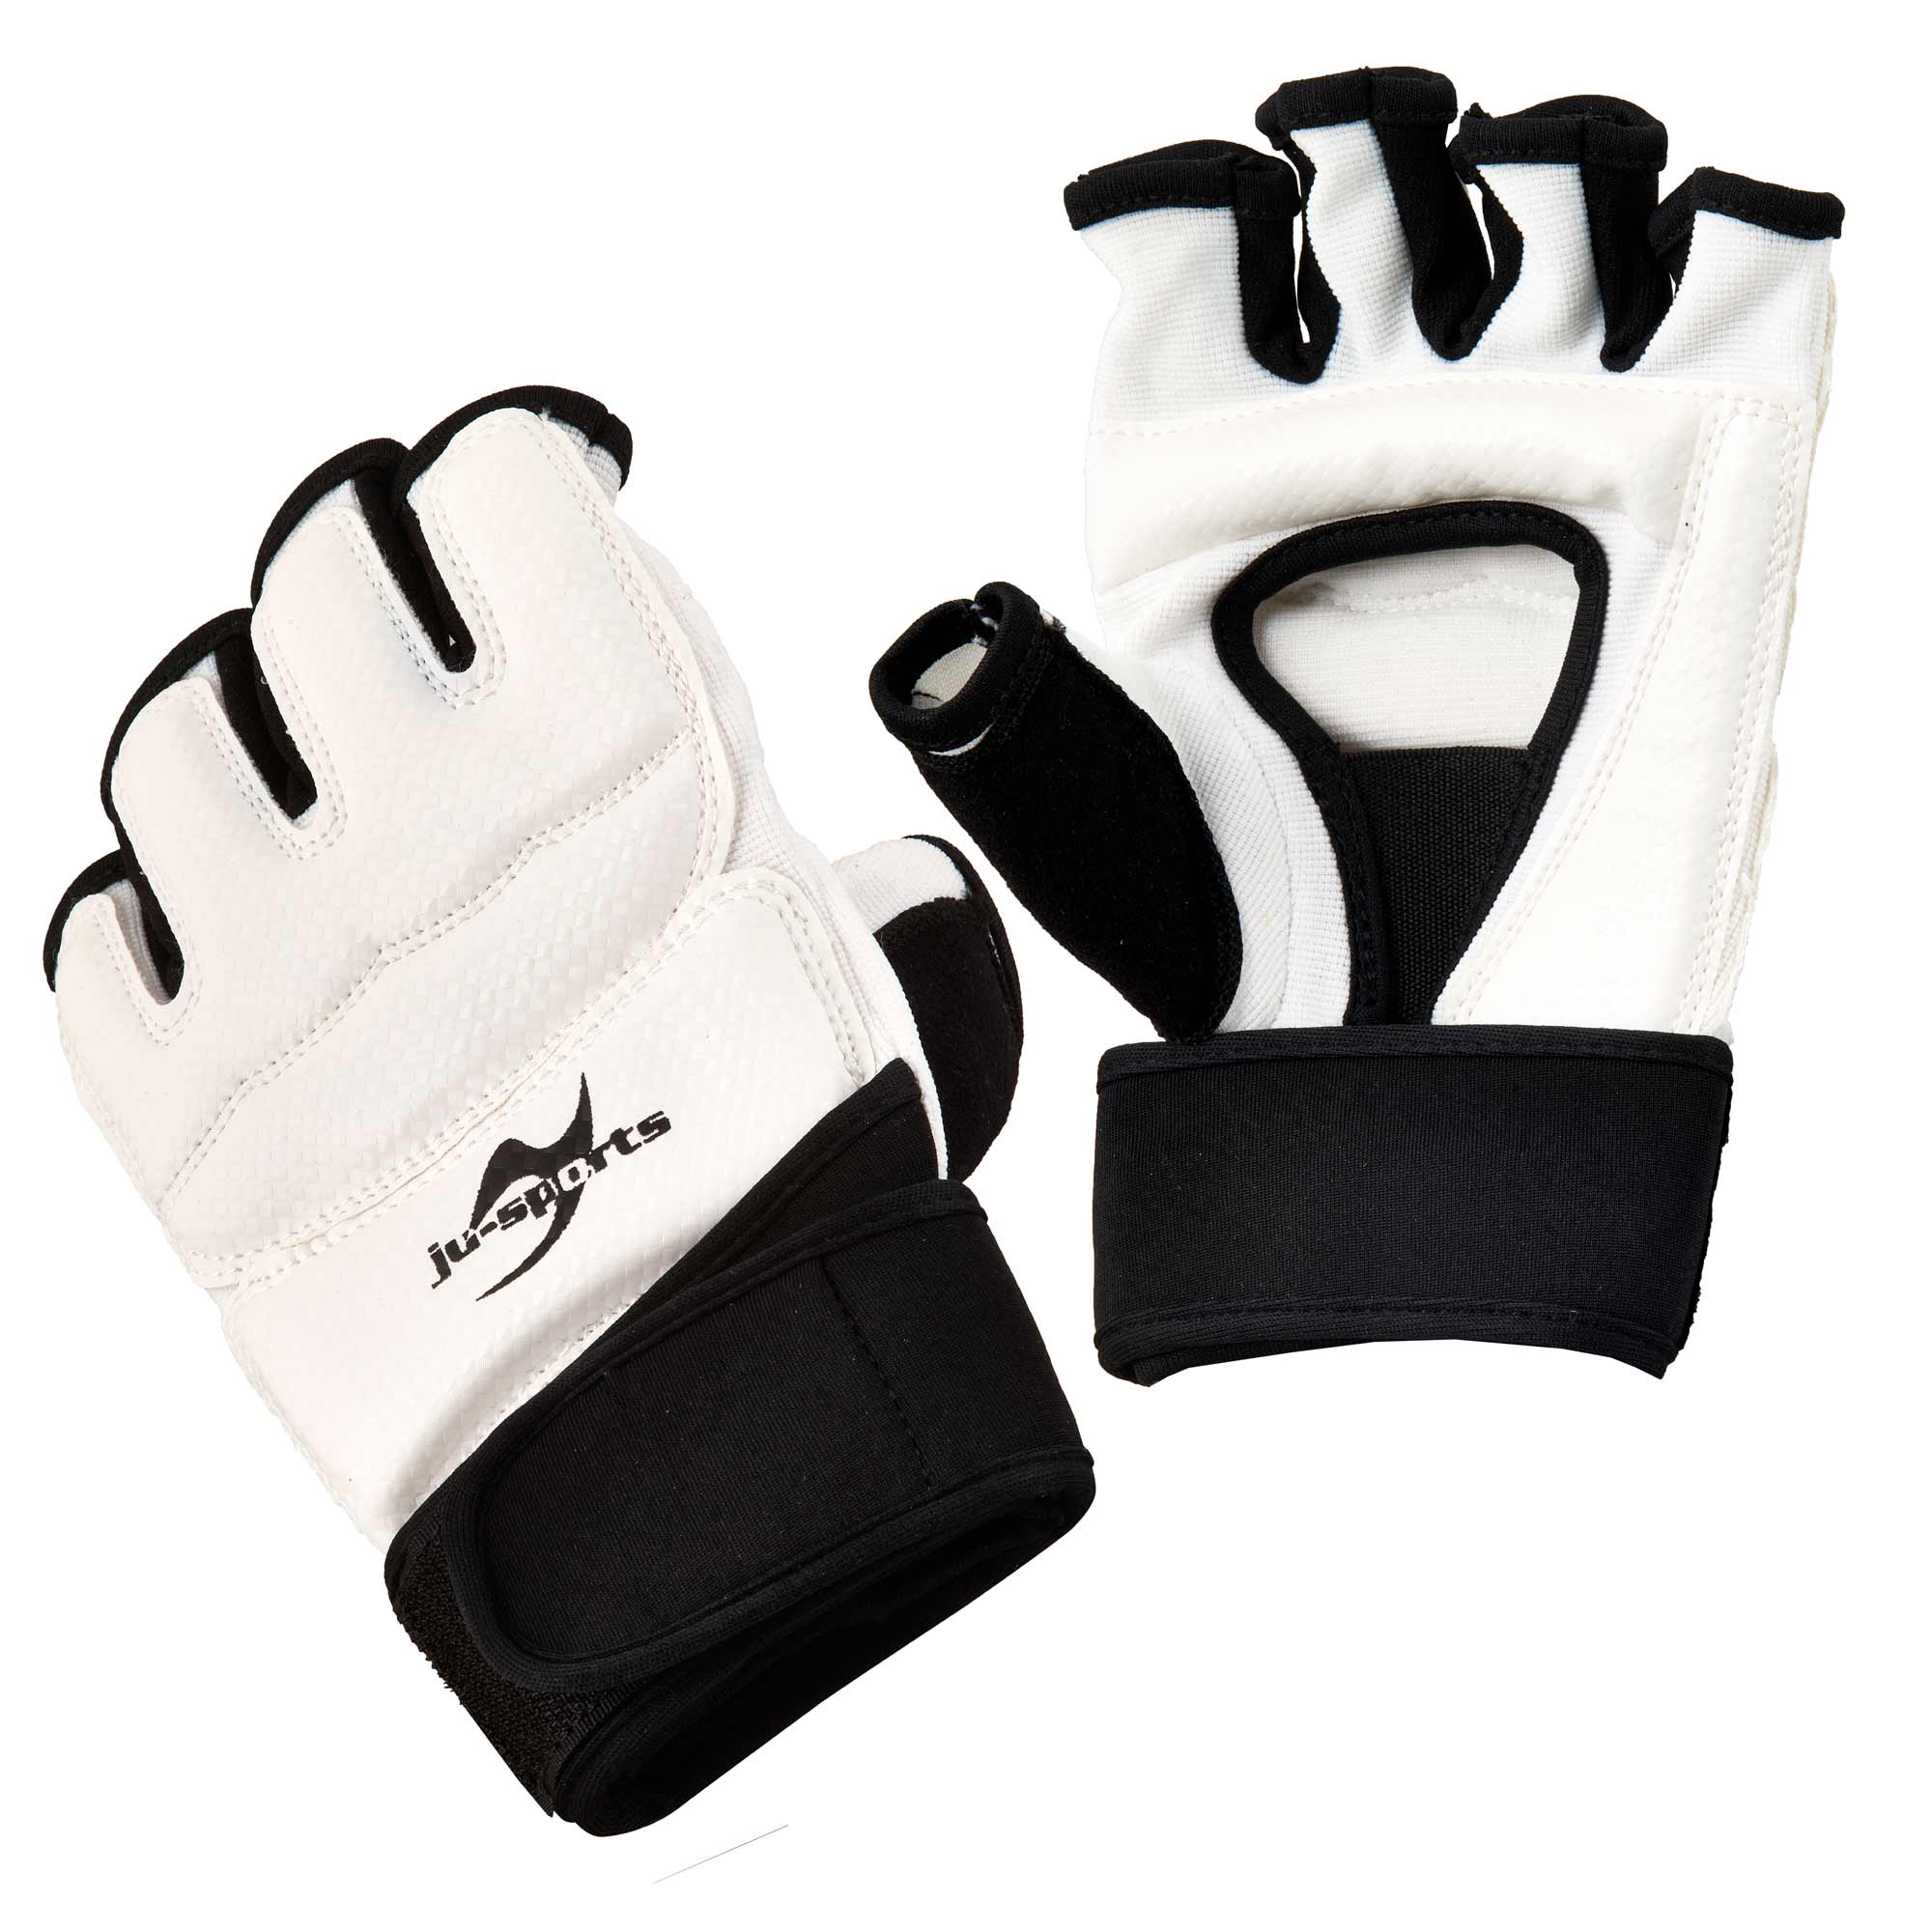 Ju-Sports Taekwondo Gloves